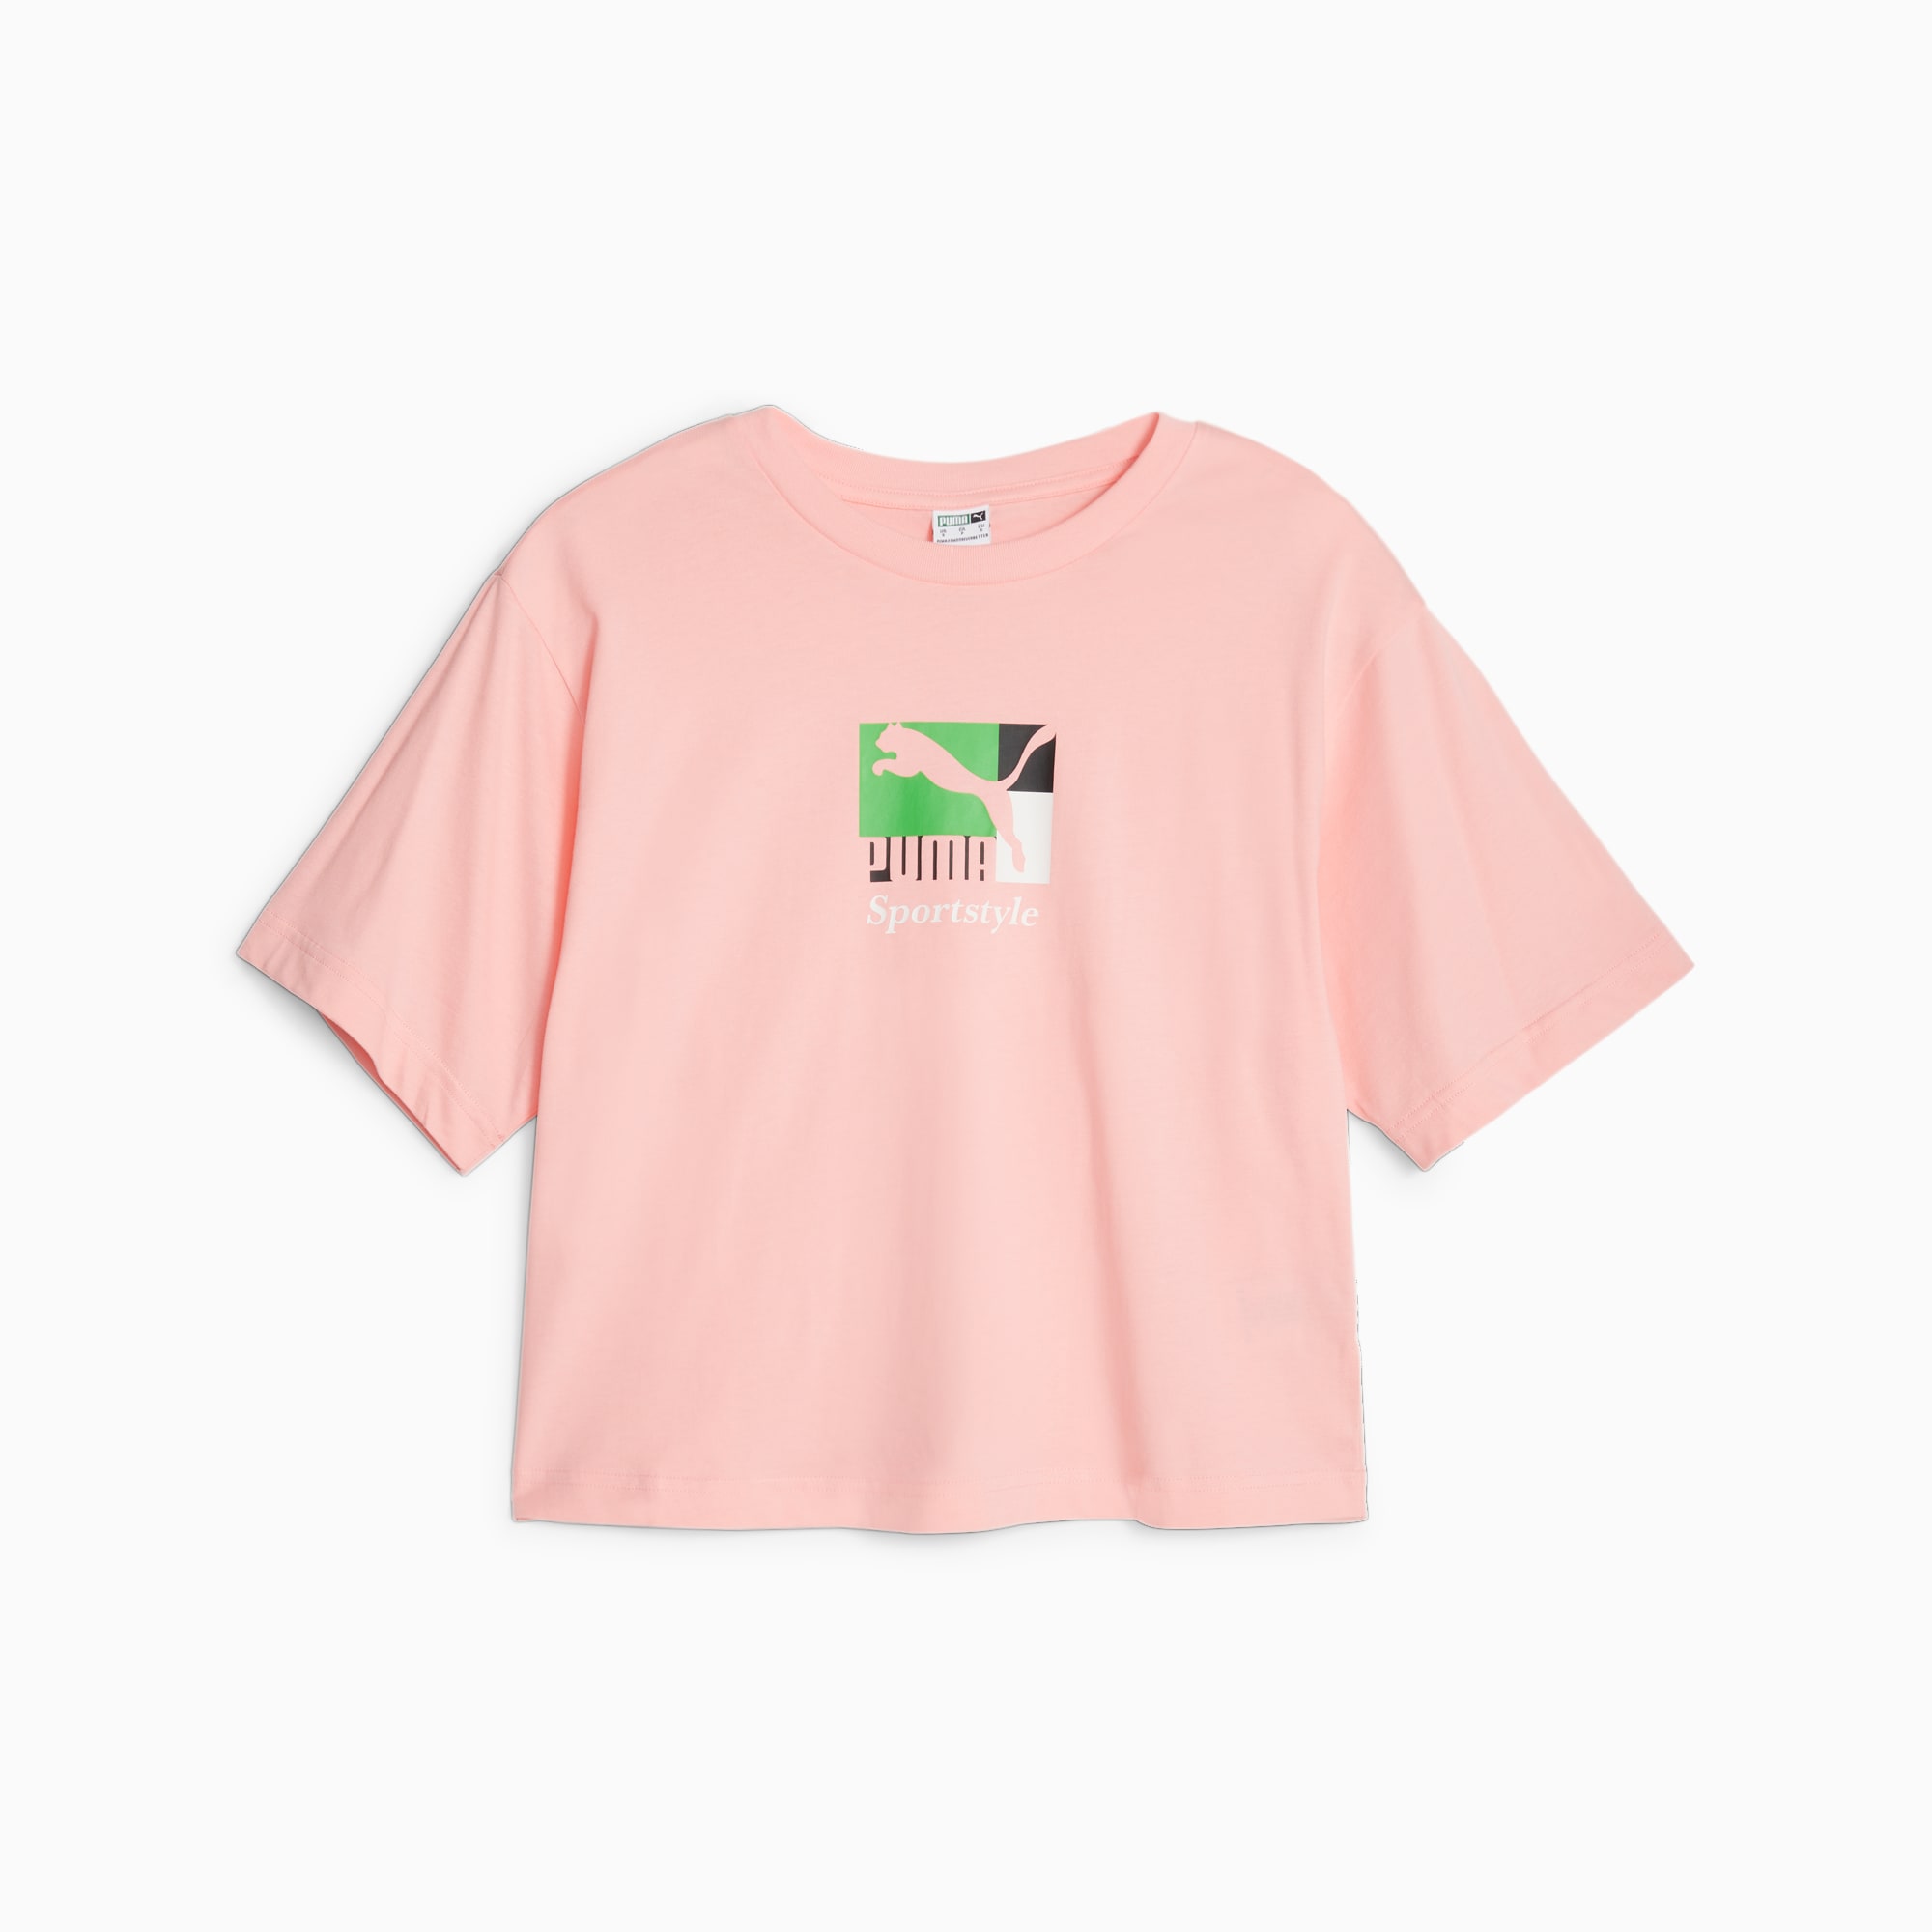 PUMA Classics Brand Love Women's T-Shirt, Peach Smoothie, Size XL, Clothing